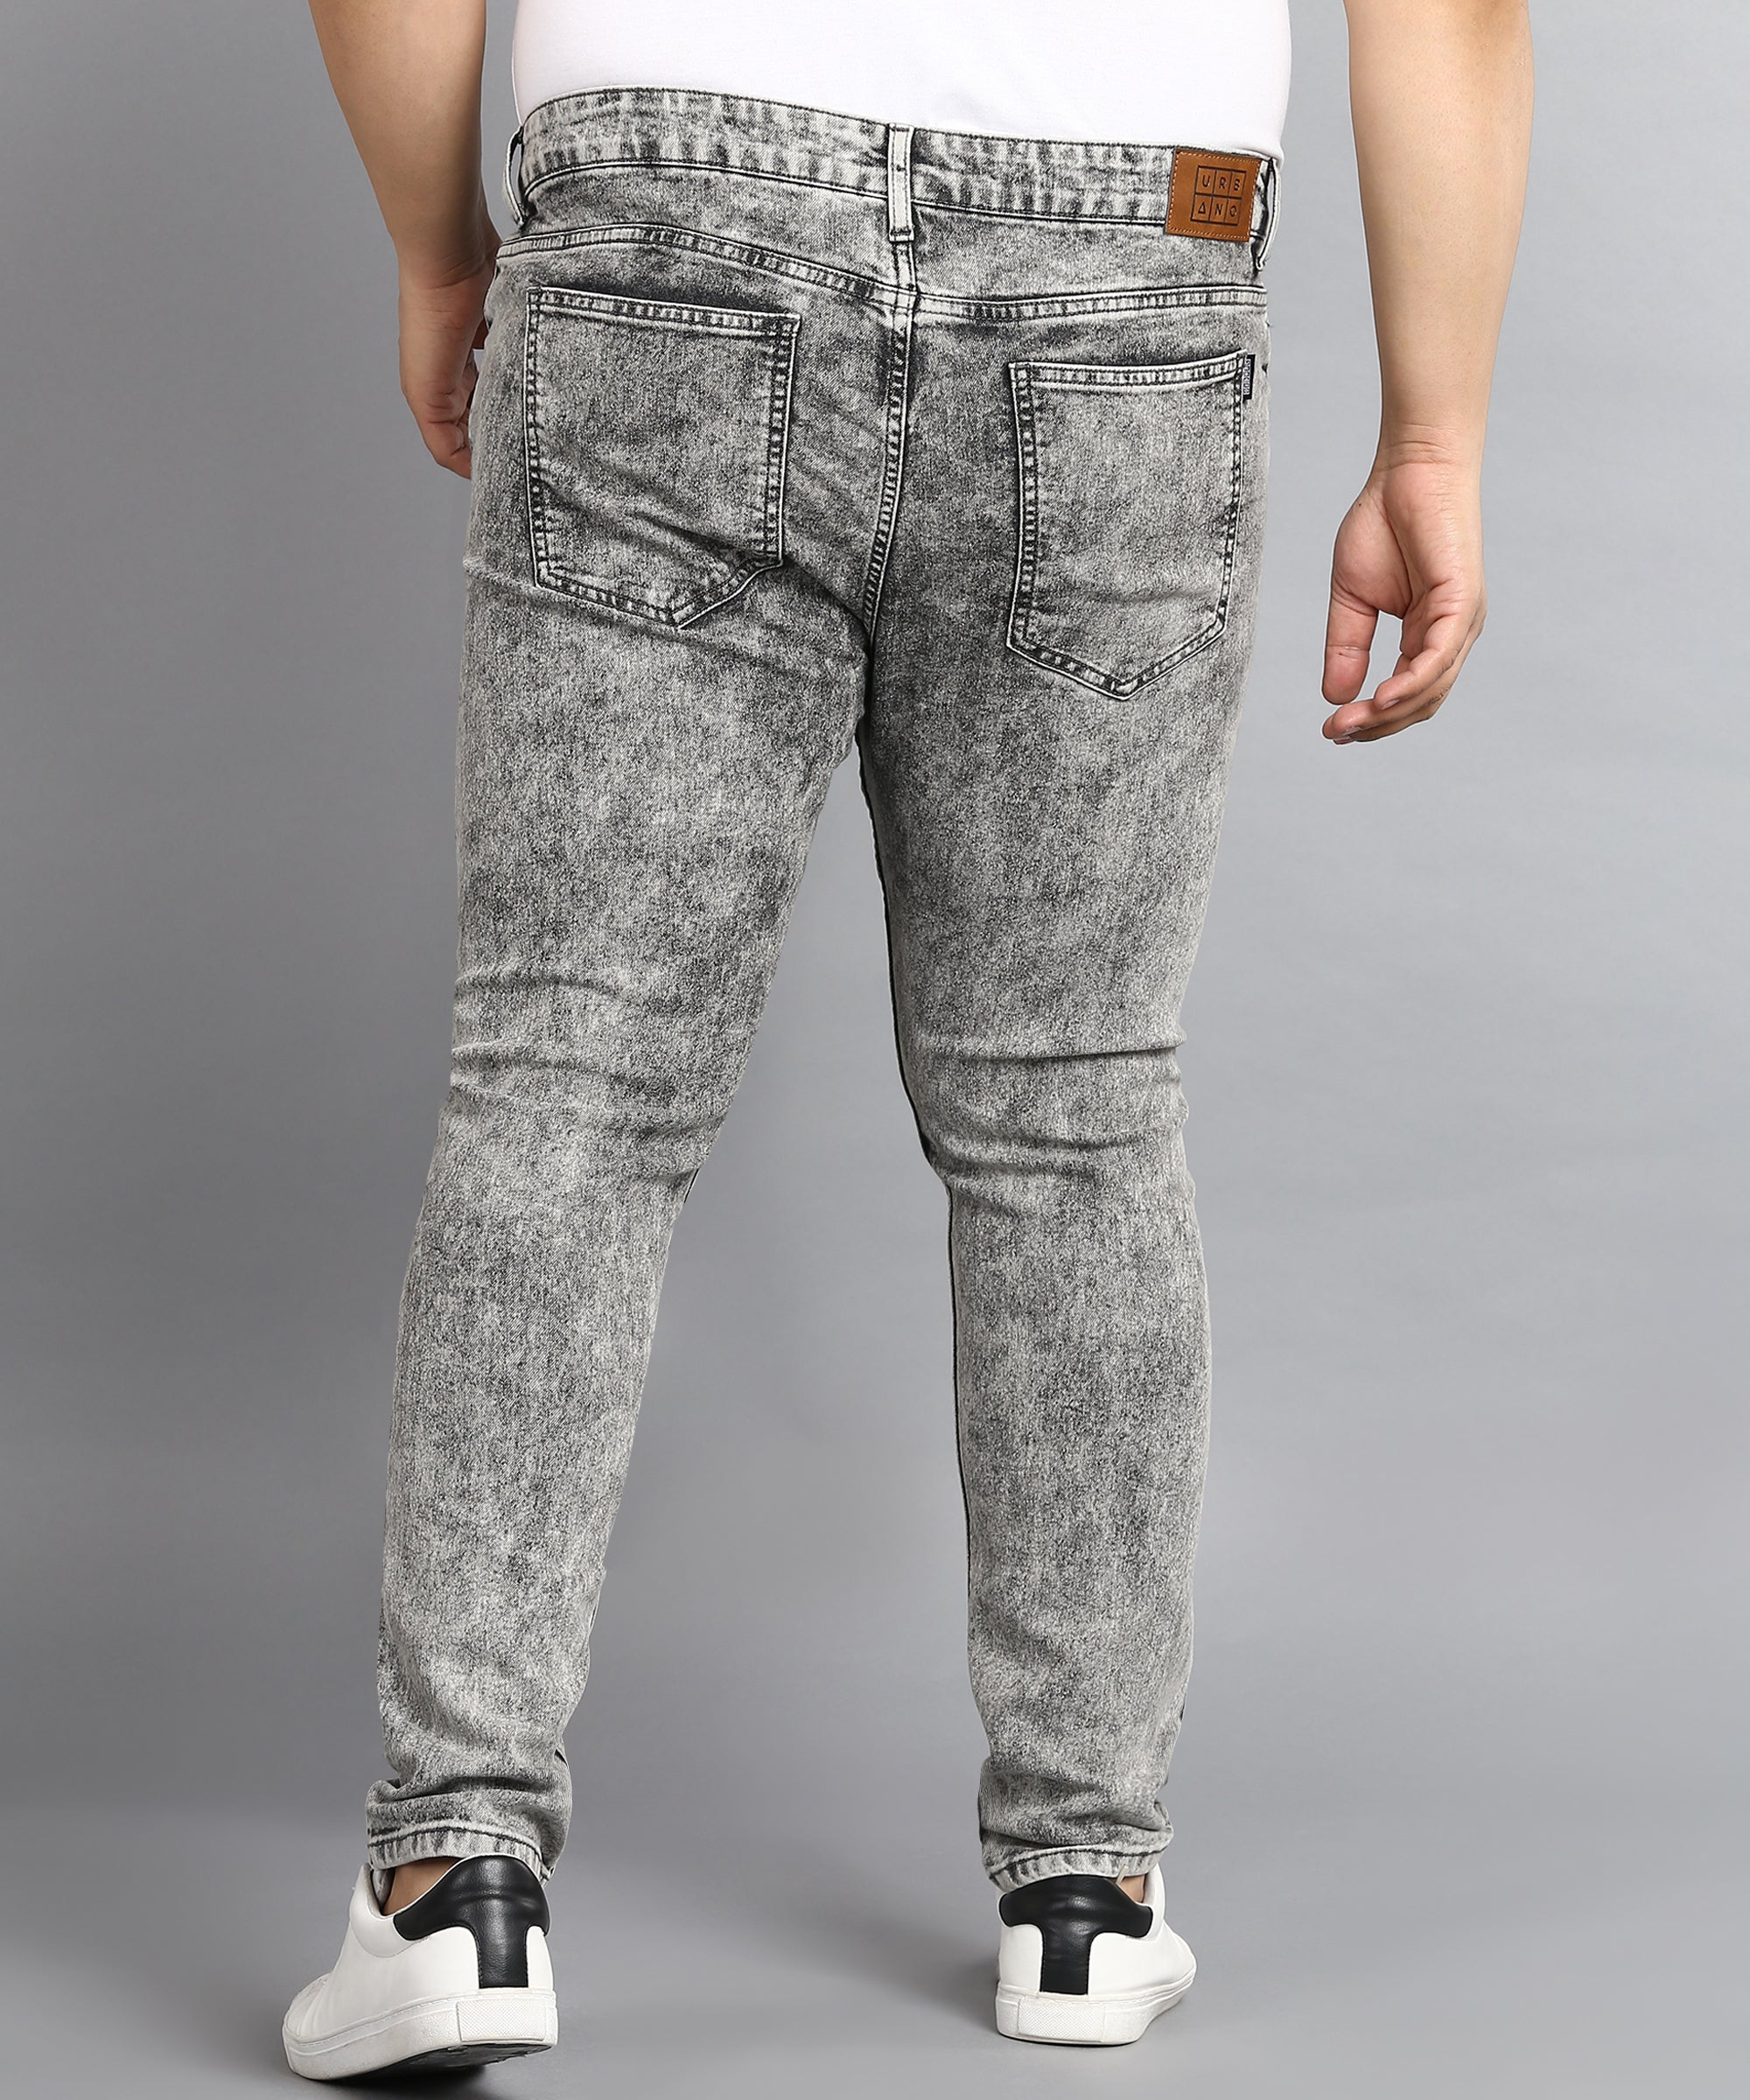 Plus Men's Light Grey Regular Fit Washed Jeans Stretchable